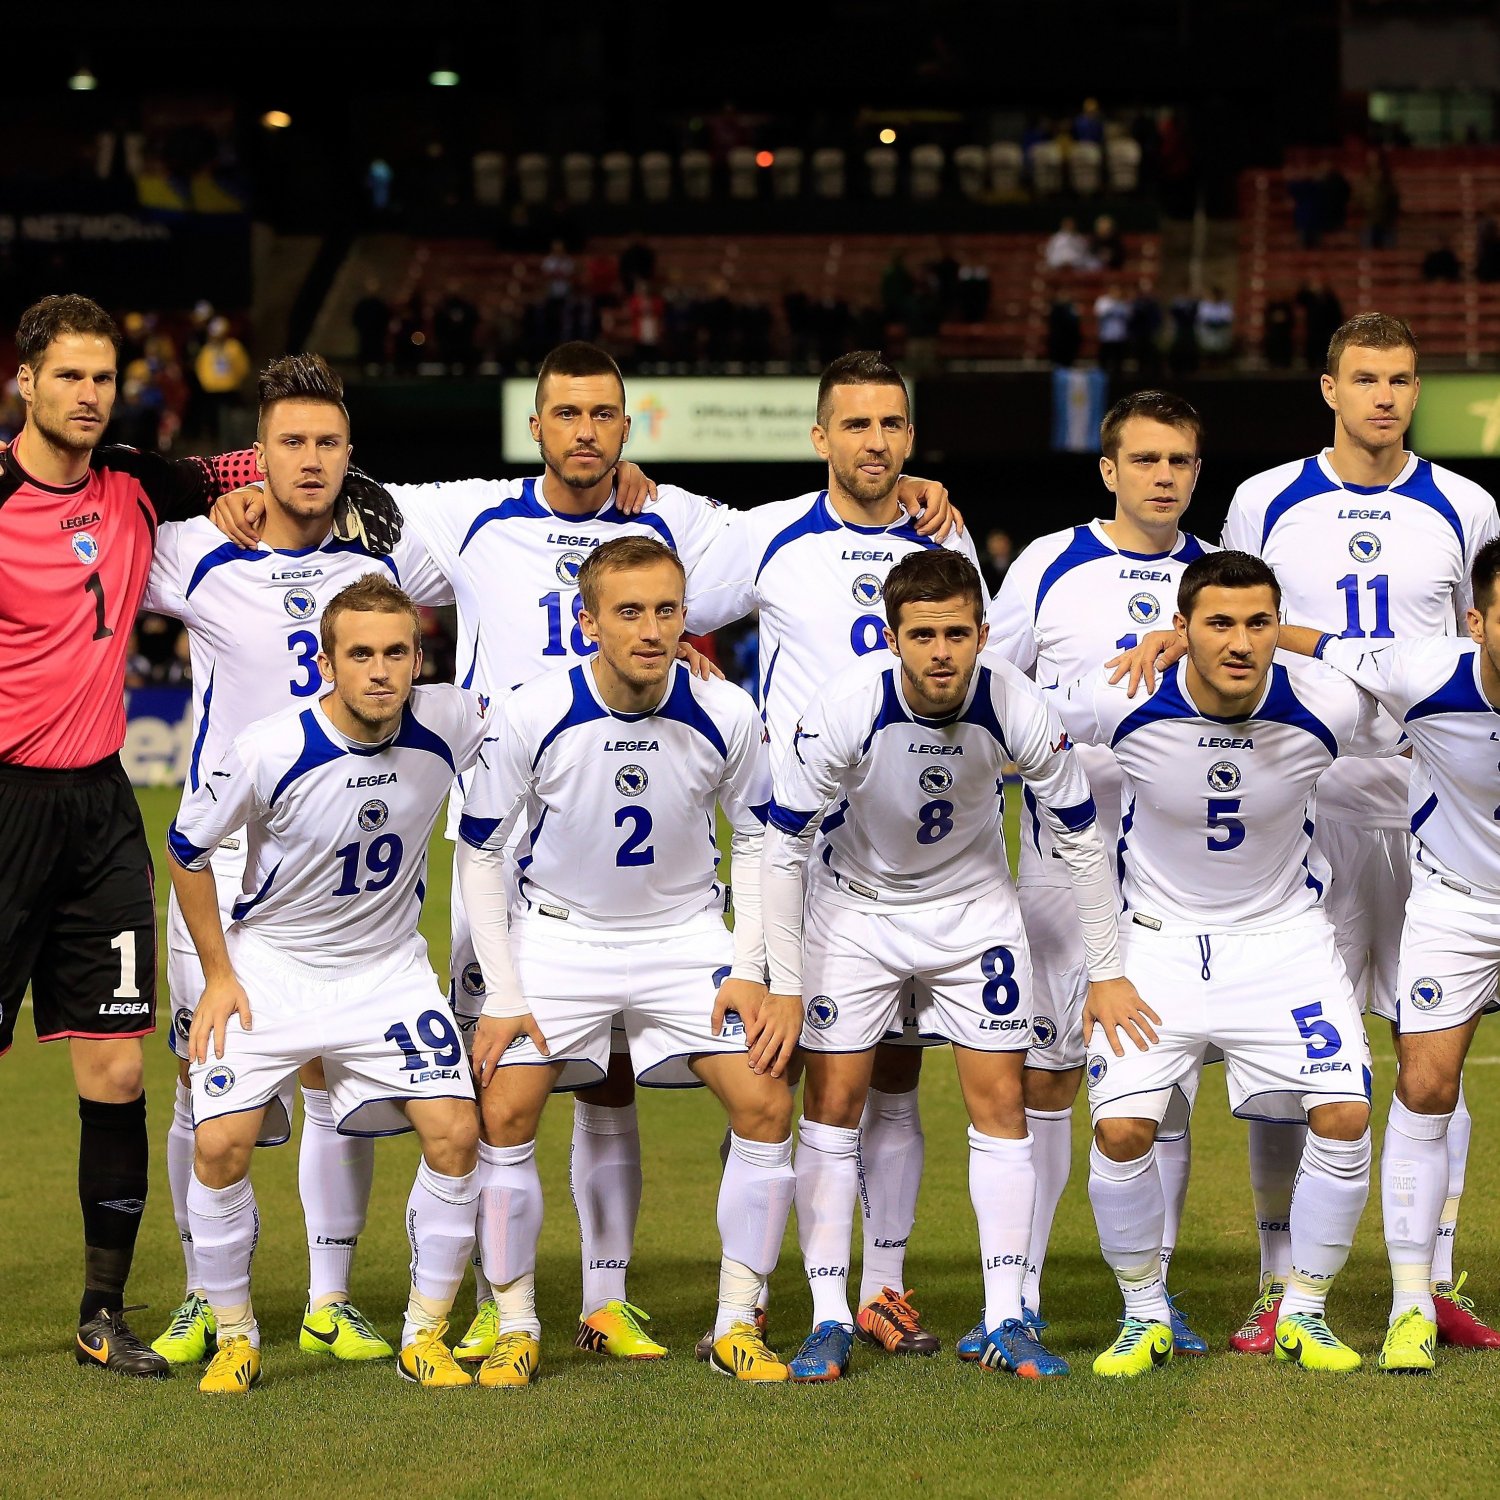 bosnia-herzegovina-0-2-italy-nations-league-player-ratings